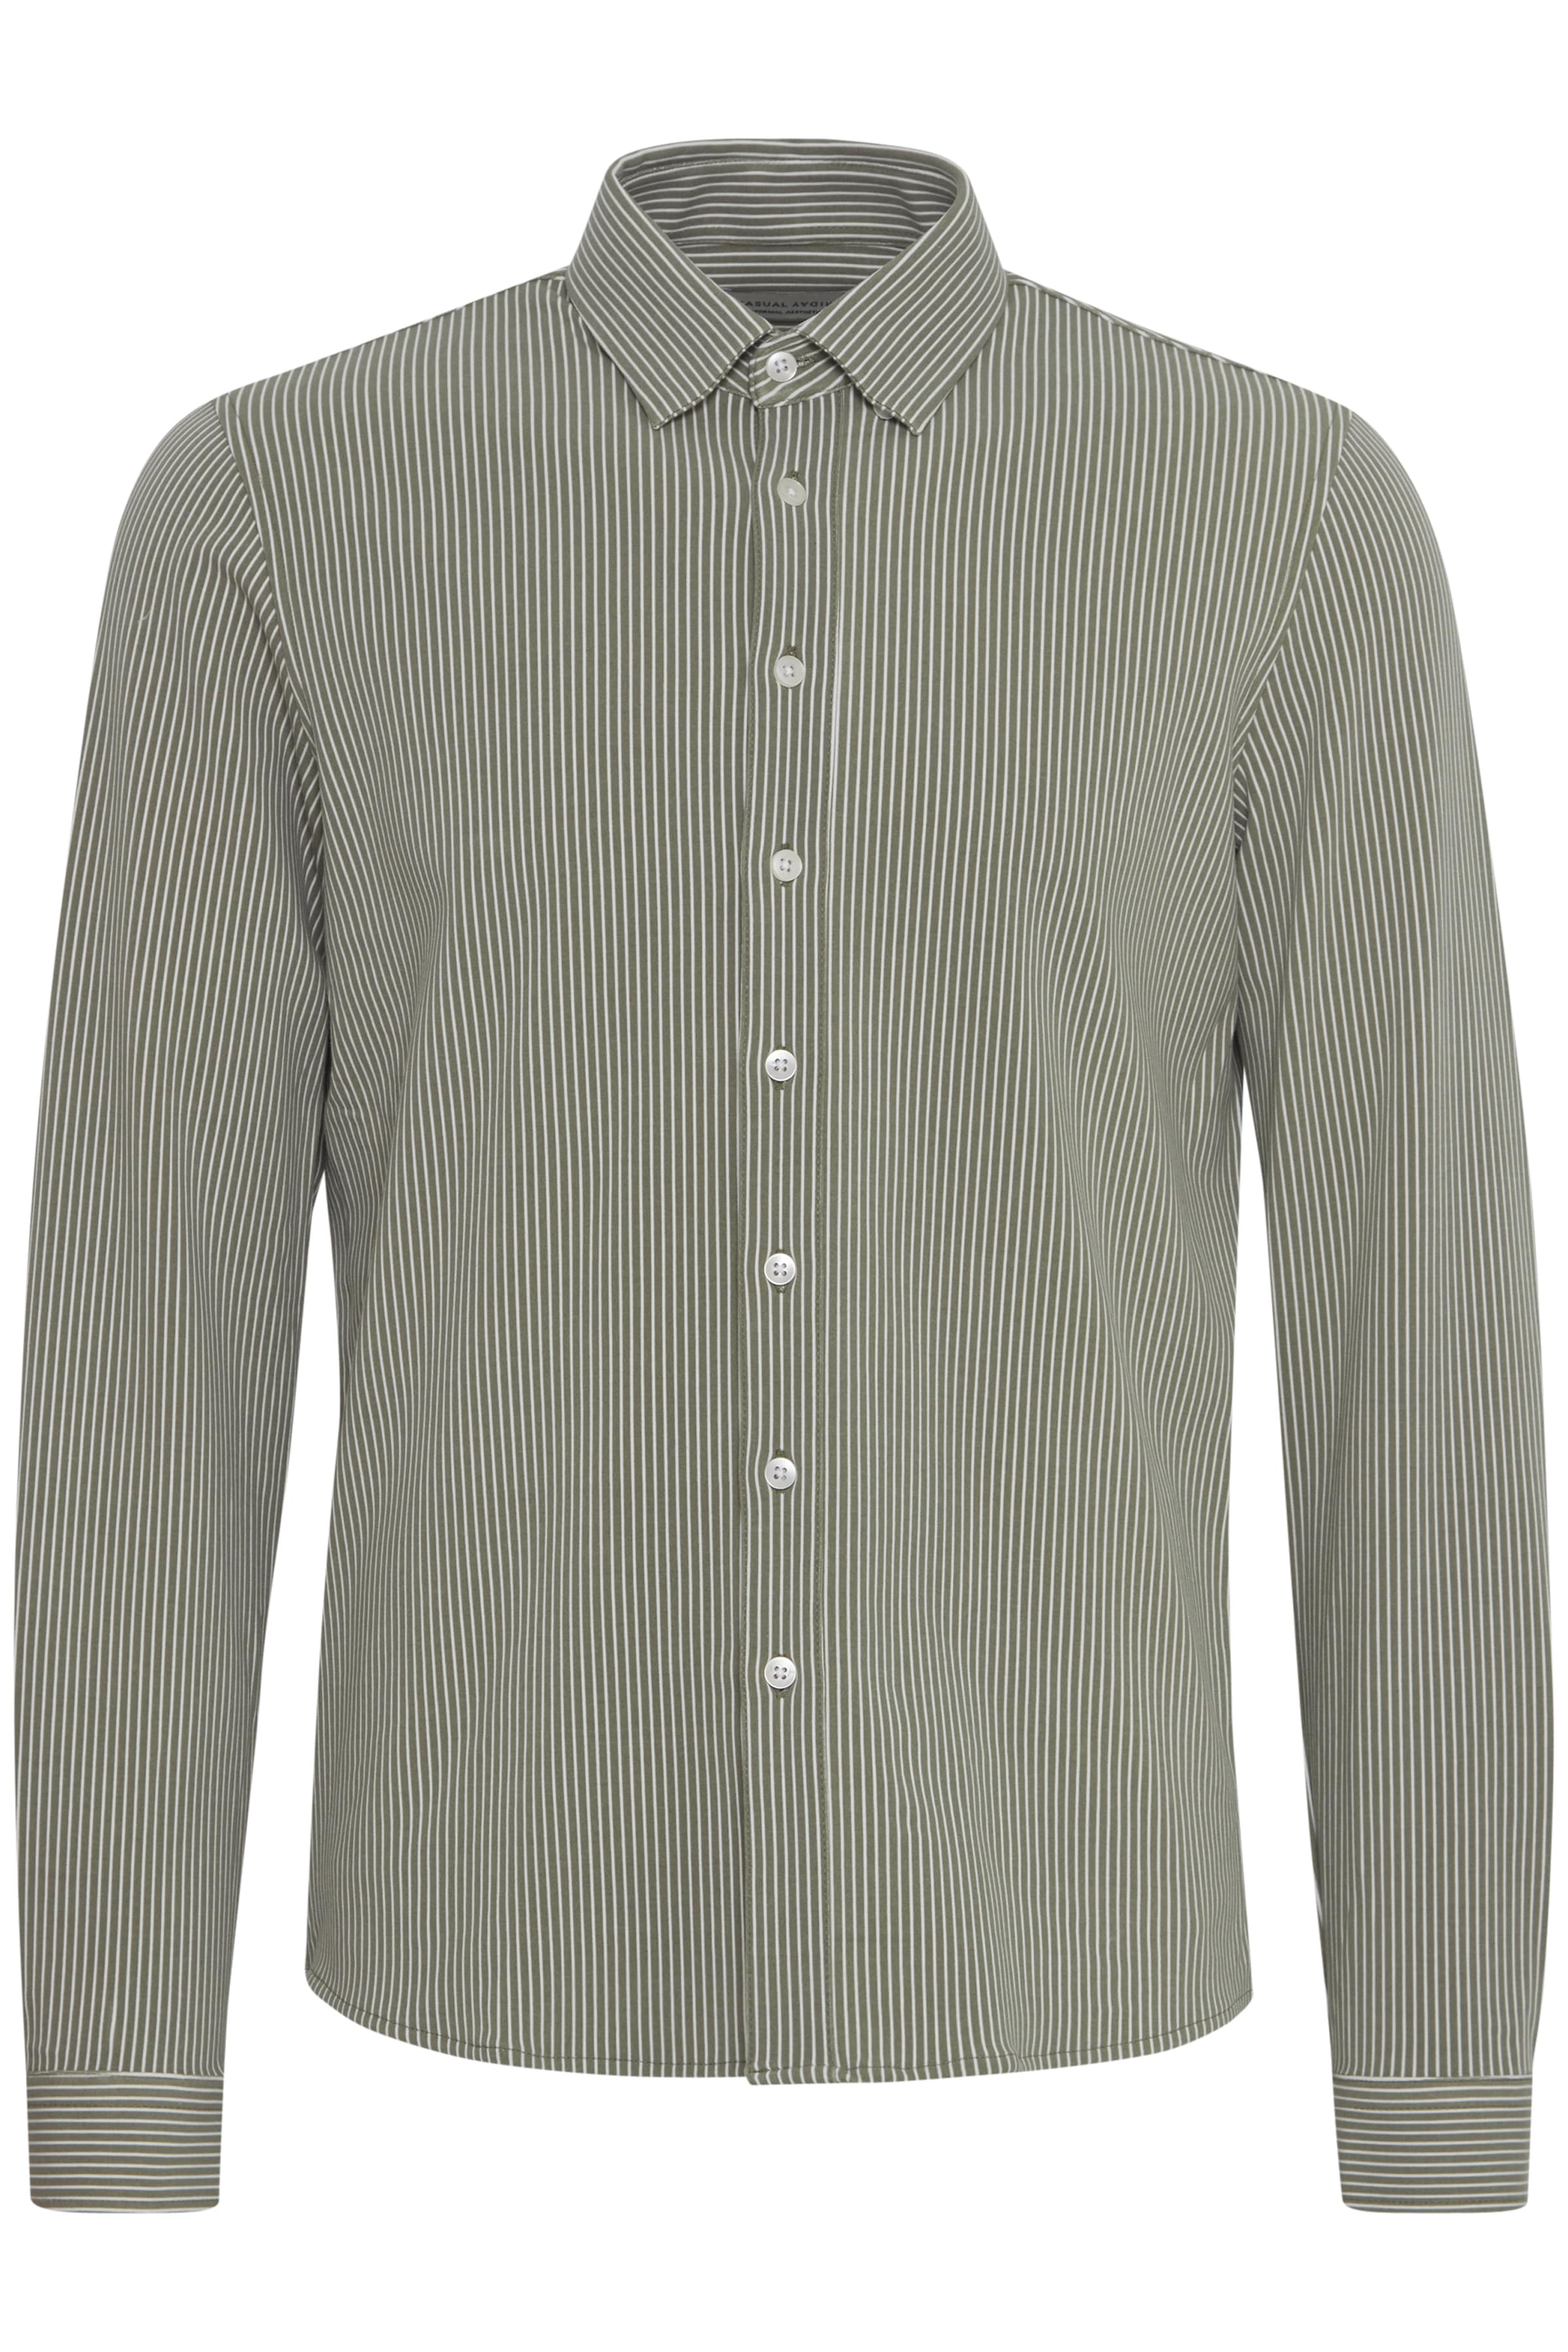 Arthur Striped Shirt Vetiver Green, grøn stribet skjorte til mænd fra Casual Friday. Her set forfra.